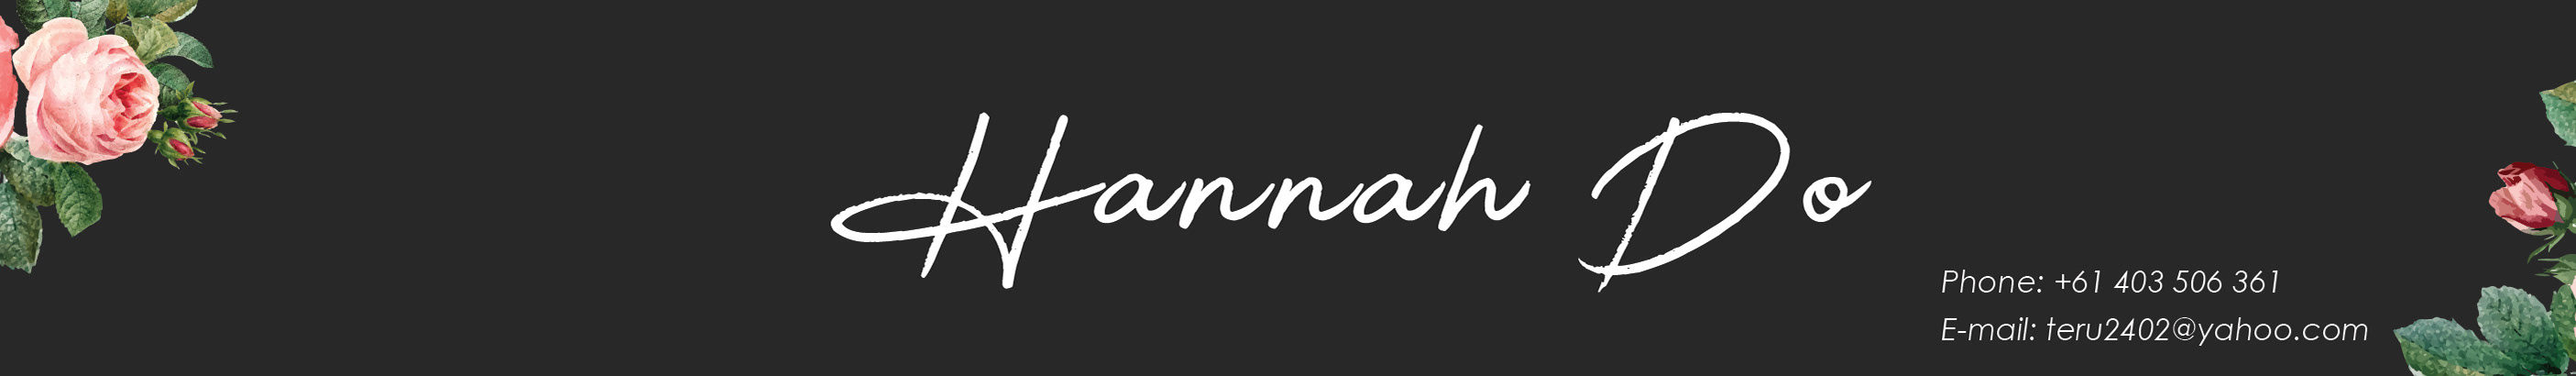 Banner profilu uživatele Hannah Do